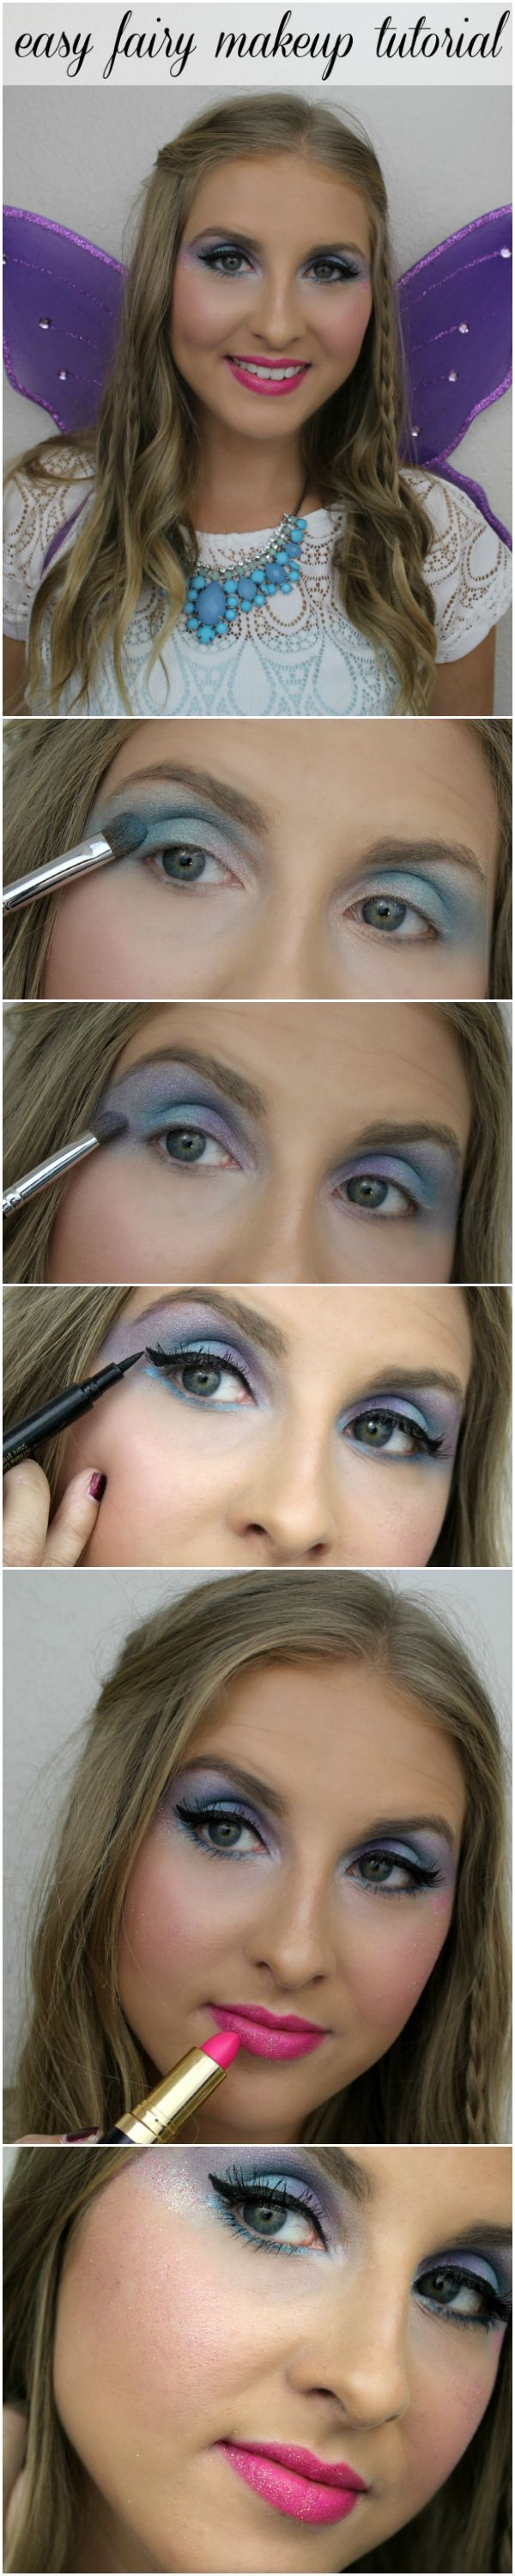 Fairy Eye Makeup Tutorial Best Ideas For Makeup Tutorials Easy Fairy Makeup Tutorial For